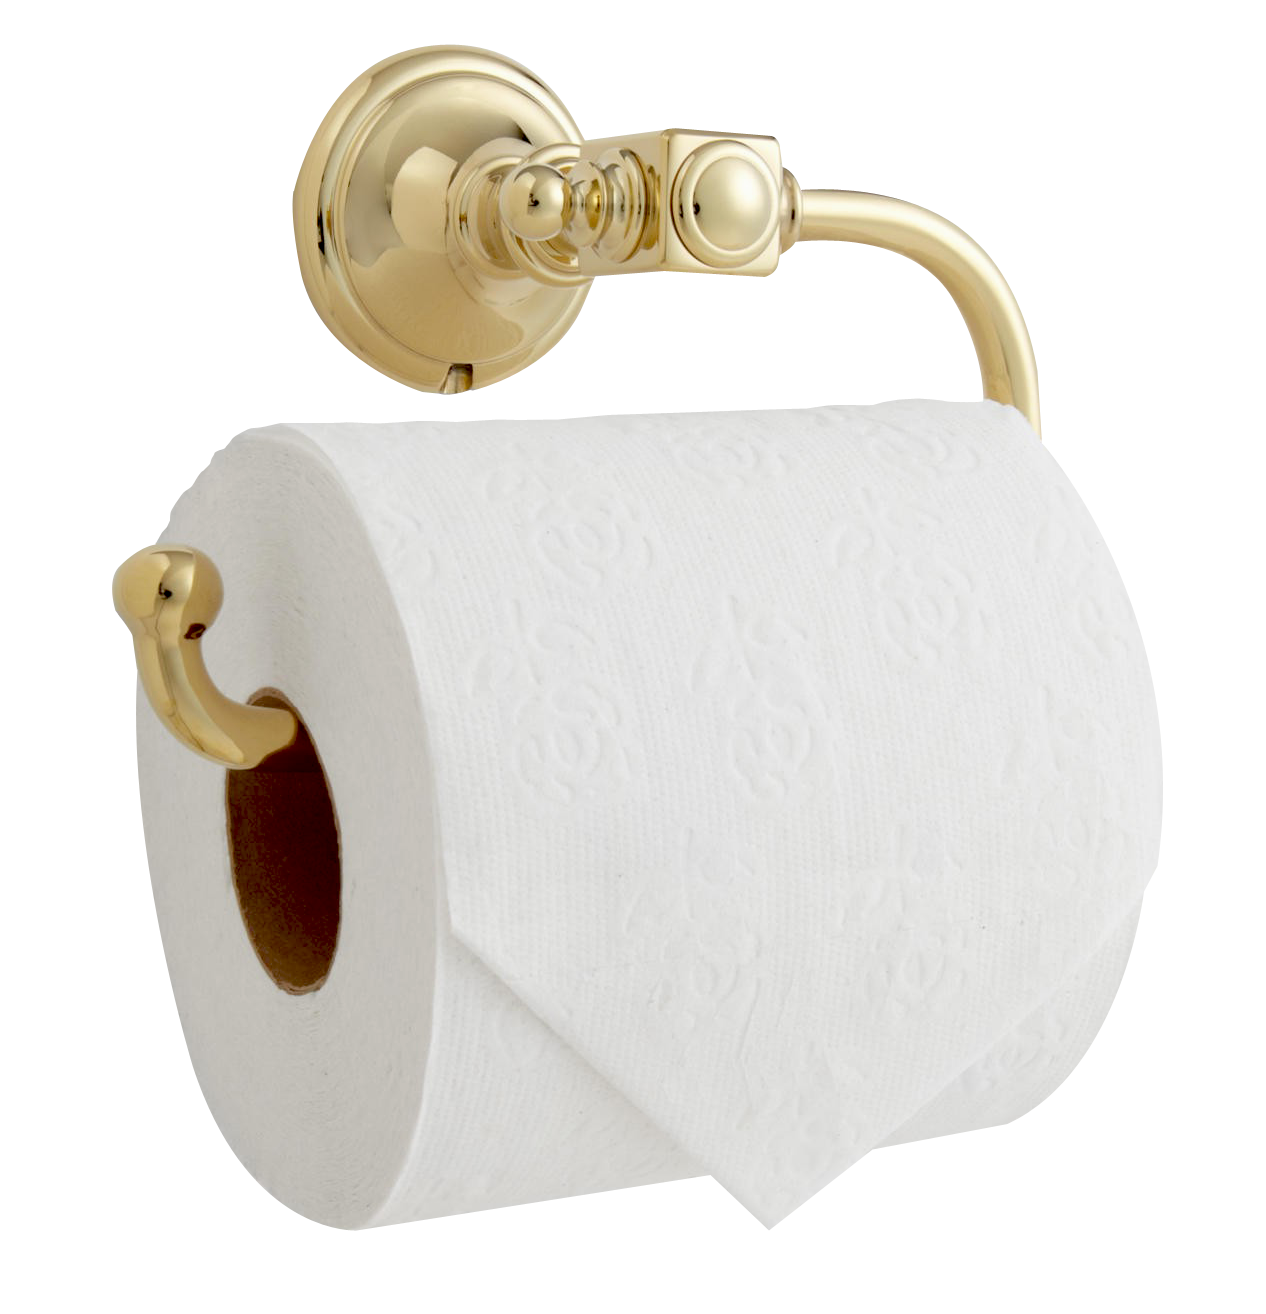 Toilet Paper PNG in Transparent pngteam.com